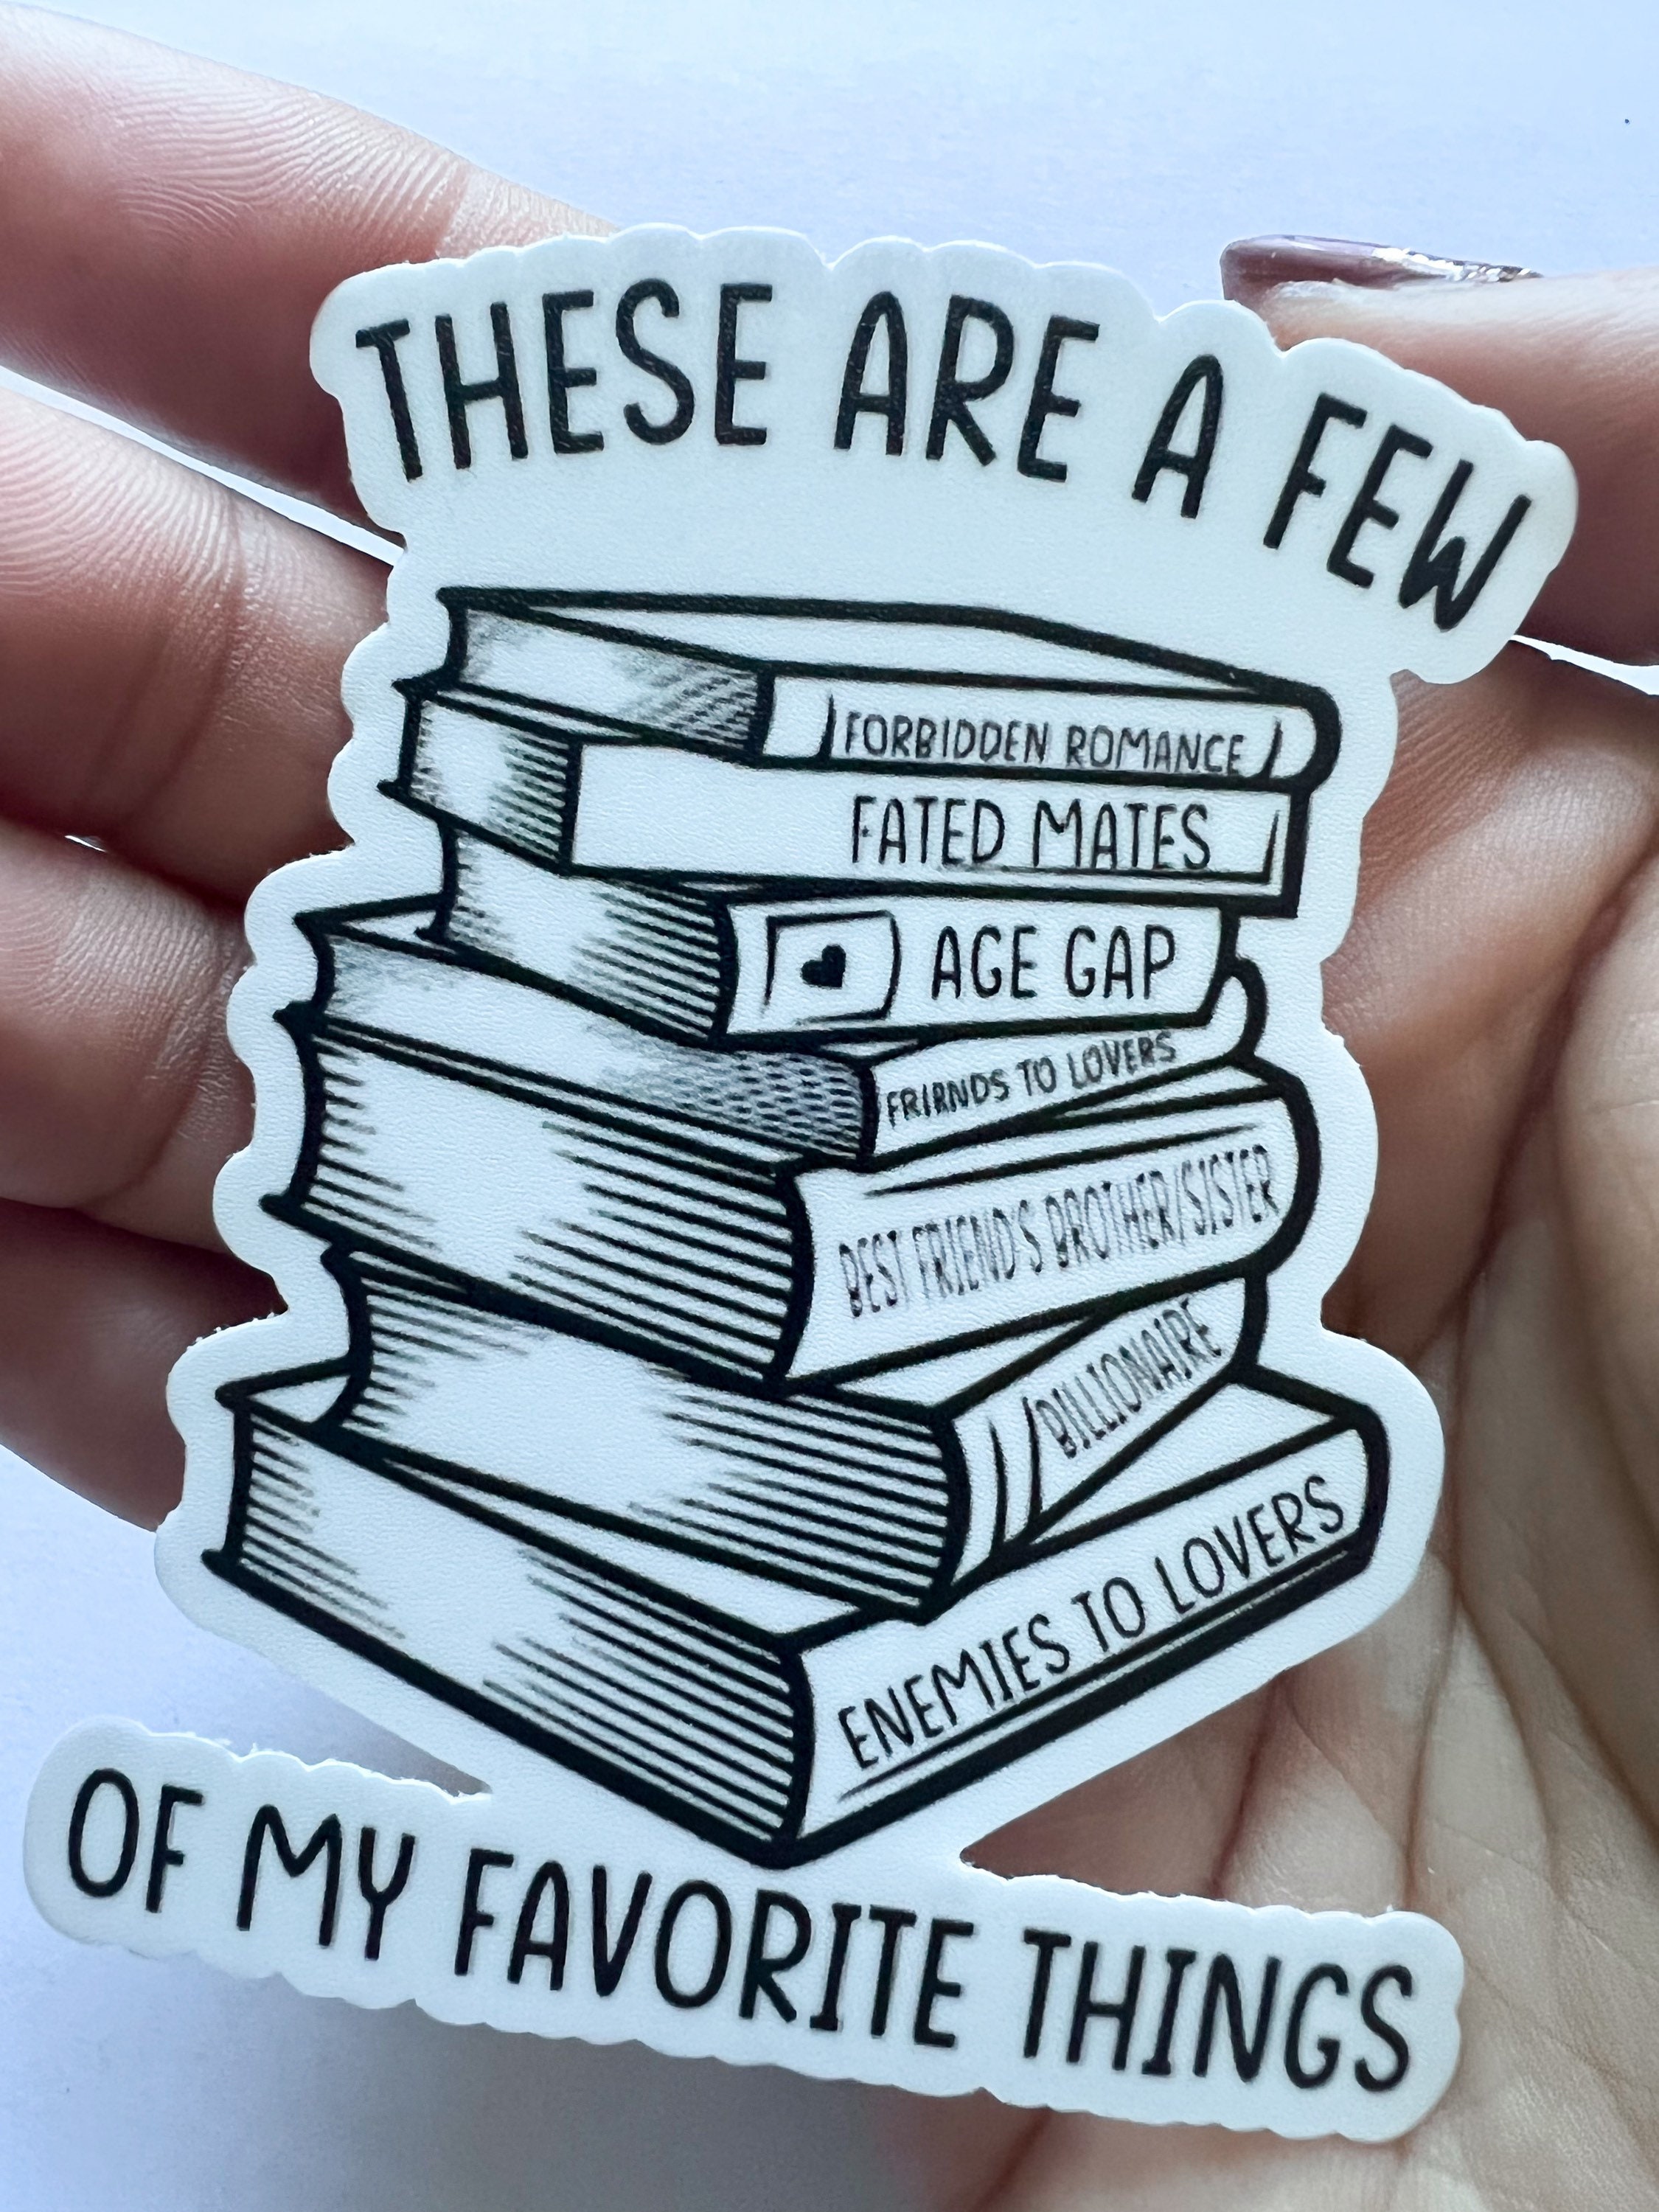 Book Sticker, Books Are My Favorite Sticker, Kindle Sticker, Booktrovert  Decal, Laptop Label, Book Worm Gift, Waterproof Sticker, Bookish 